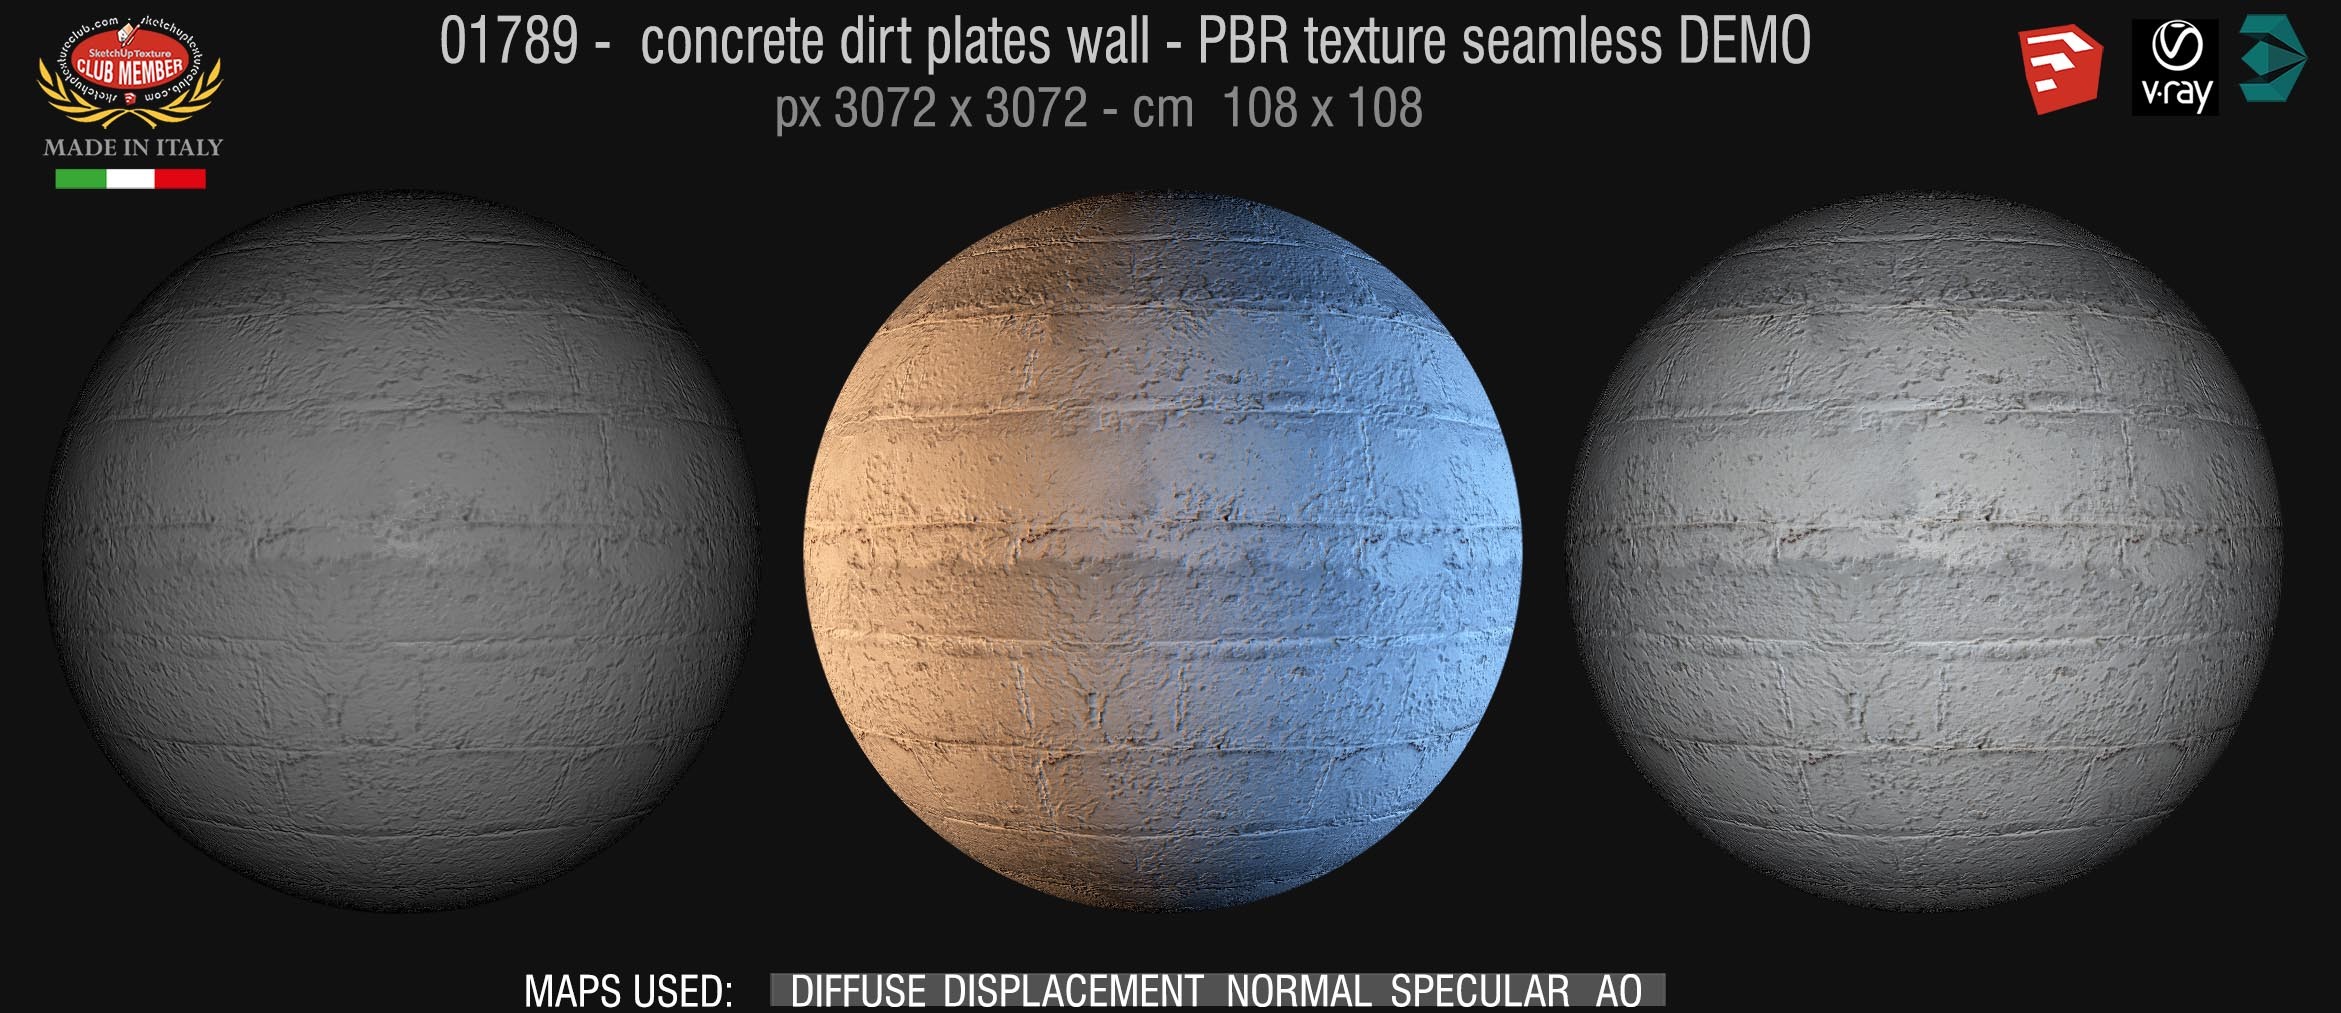 01789 concrete dirt plates wall PBR texture seamless DEMO